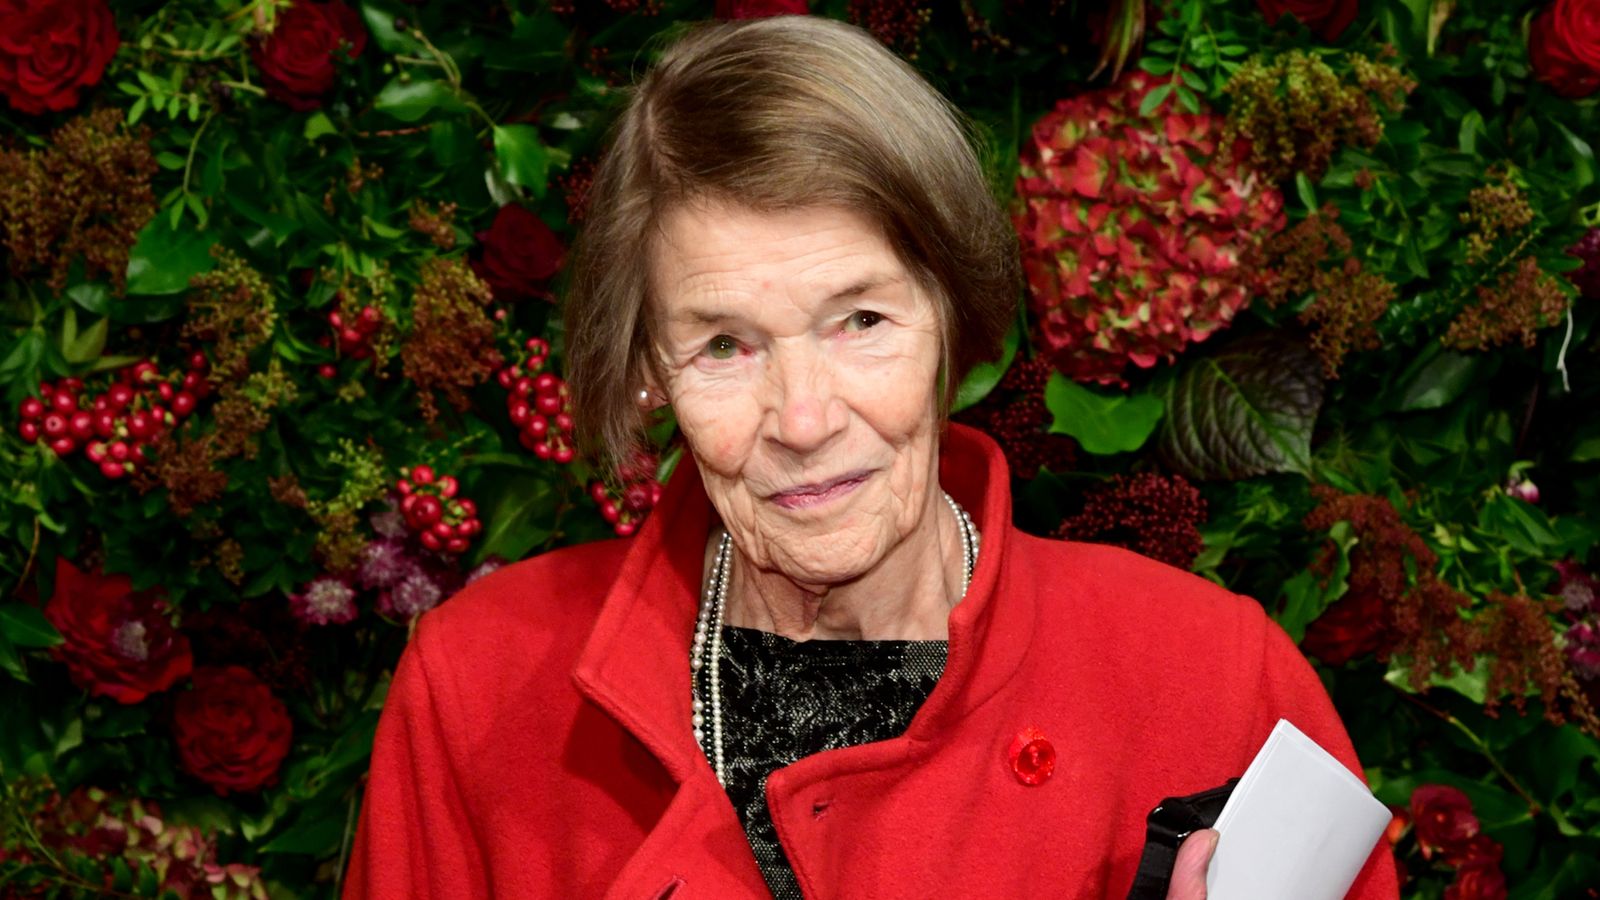 Glenda Jackson, Oscar-winning actress and former Labour MP, dies aged 87